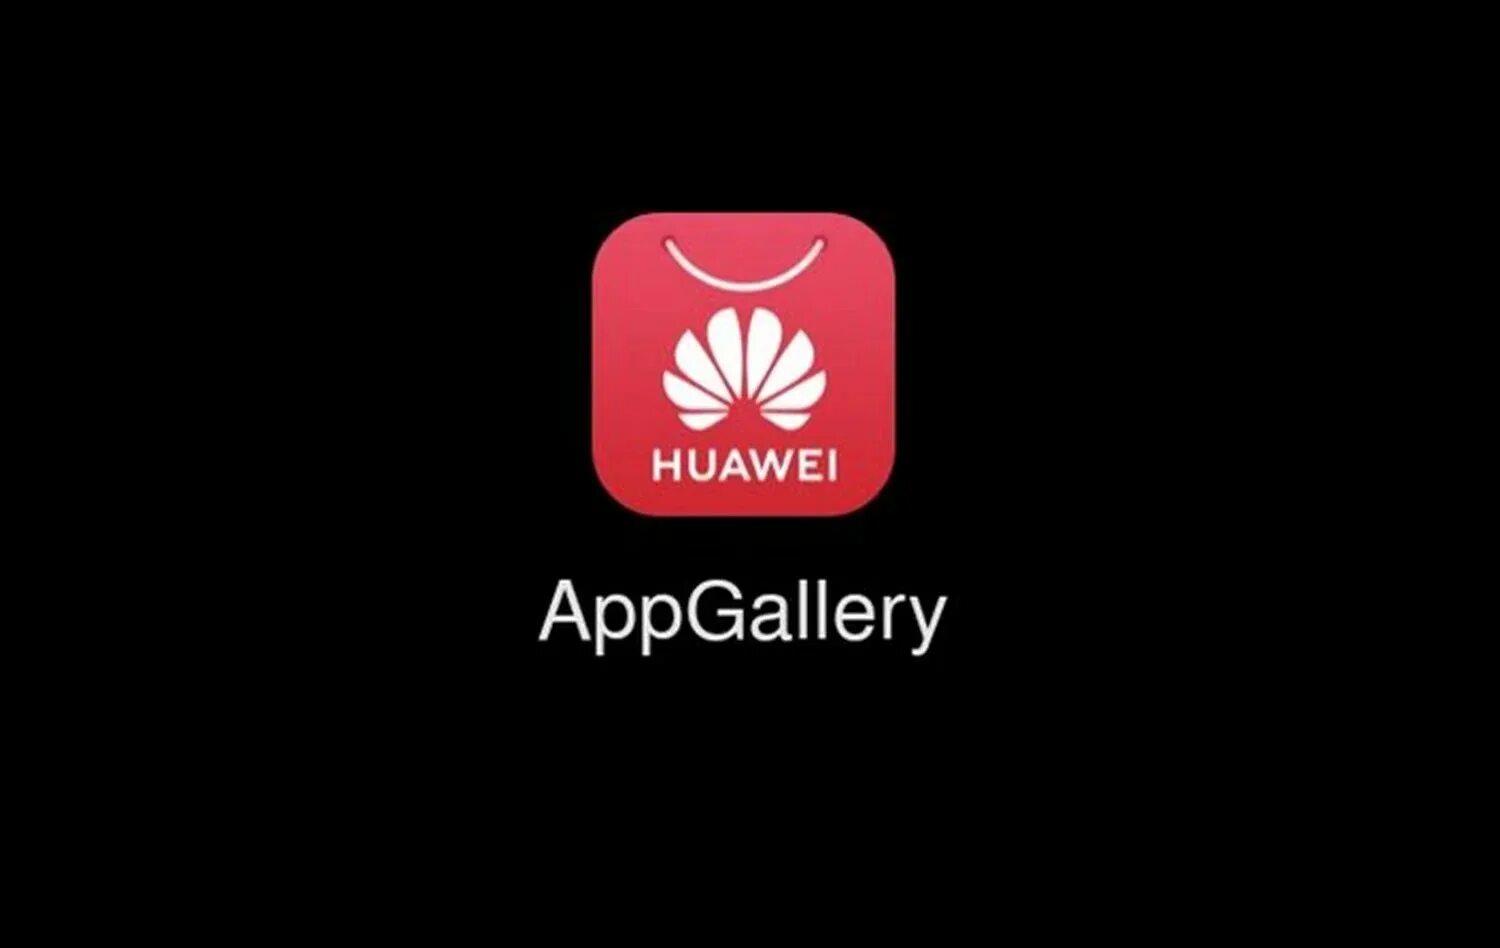 Huawei app Gallery значок. Приложения Хуавей APPGALLERY. Апп галерея Хуавей. Huawei магазин приложений.